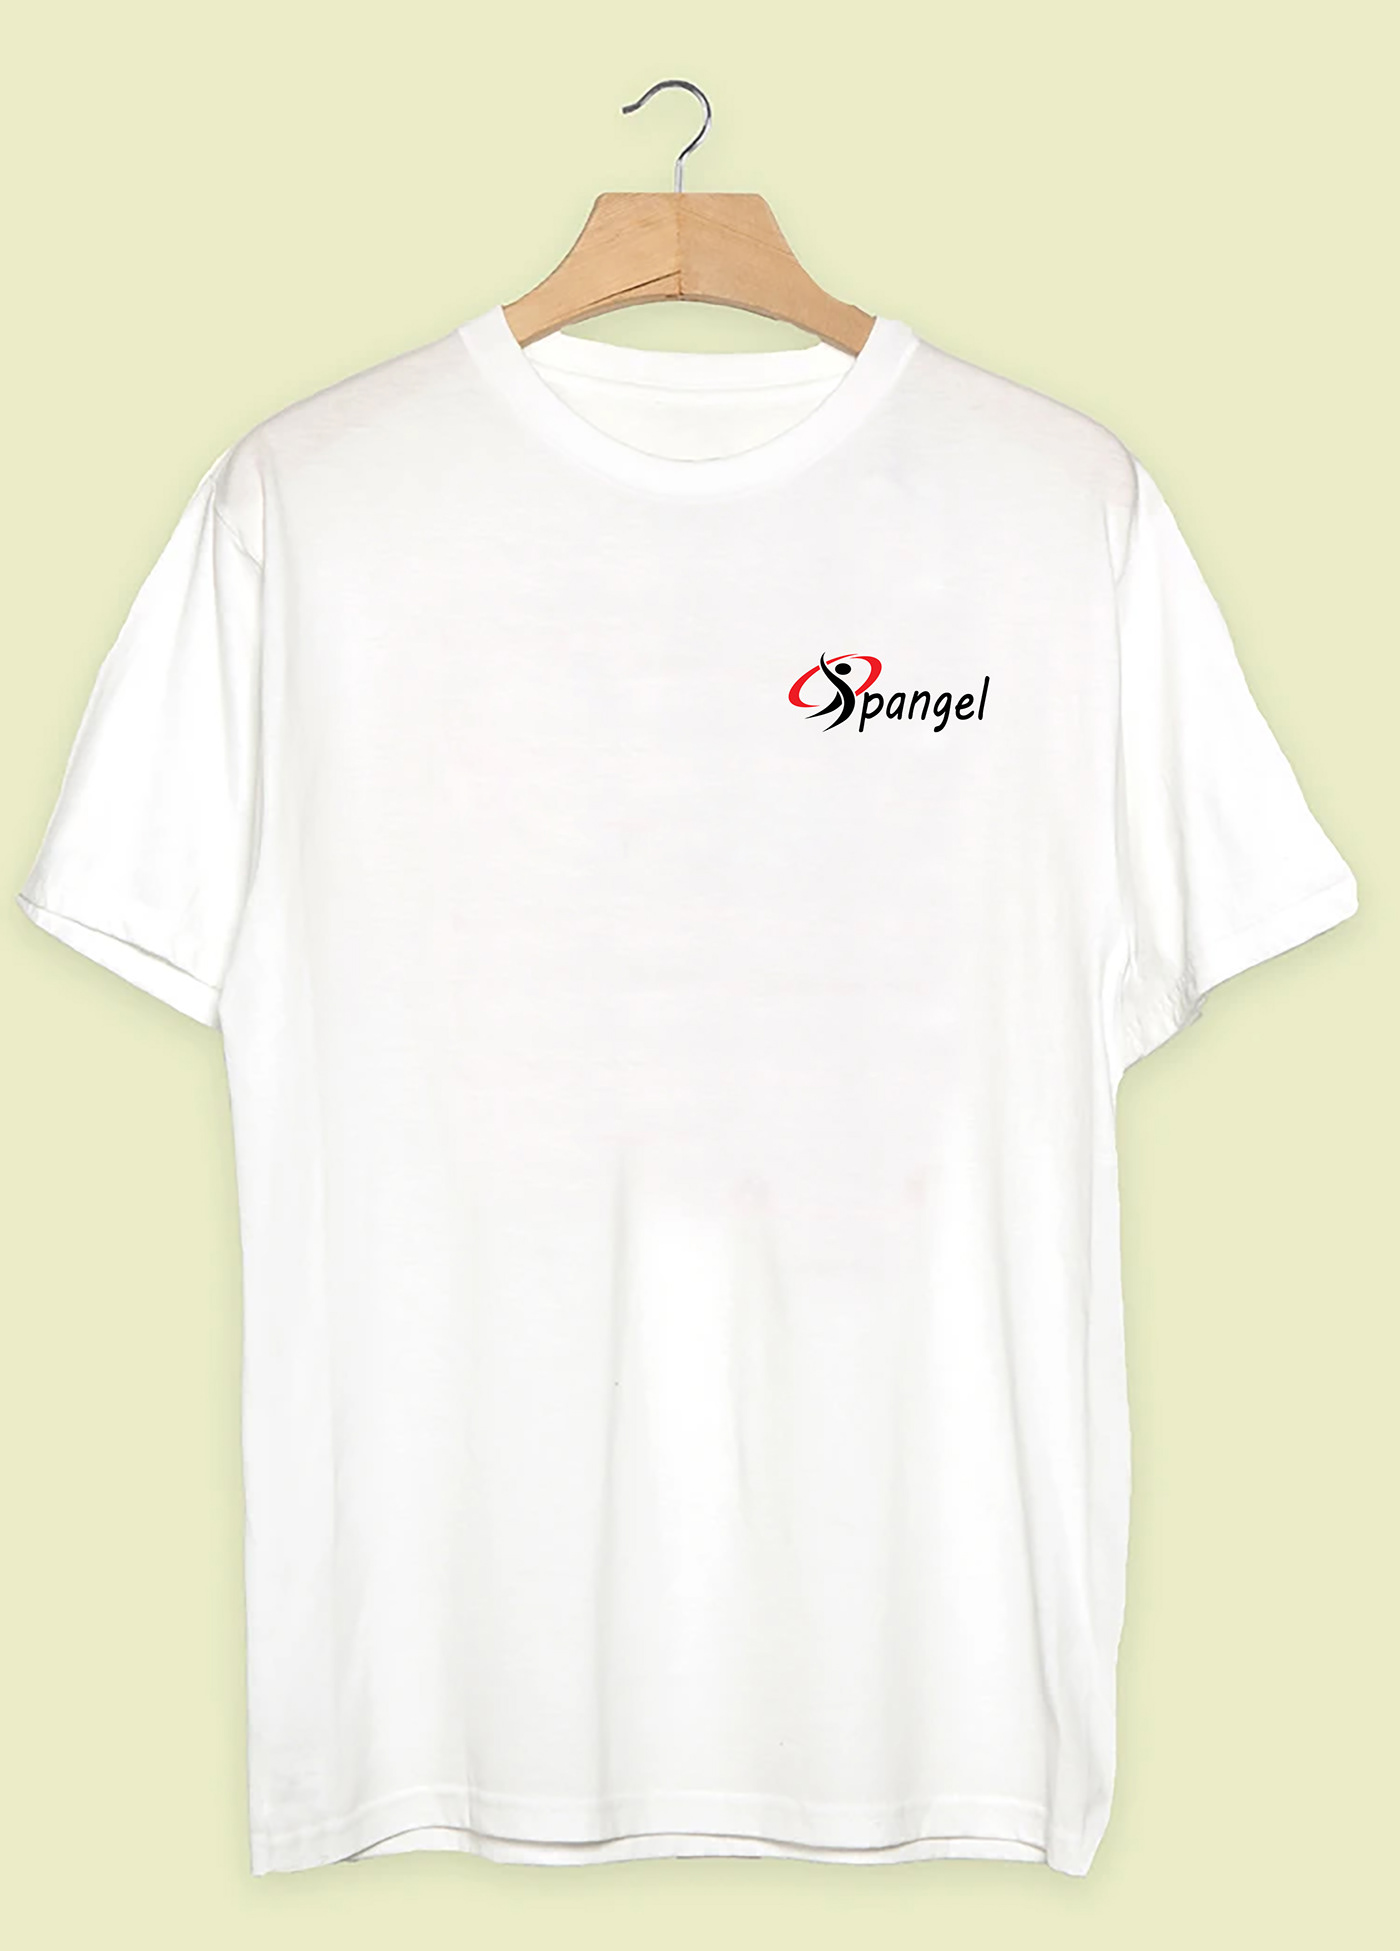 T-Shirt Design typography   t-shirt designer custom design t-shirt Tshirt Design Clothing fashion design ILLUSTRATION  T-Shirt designs